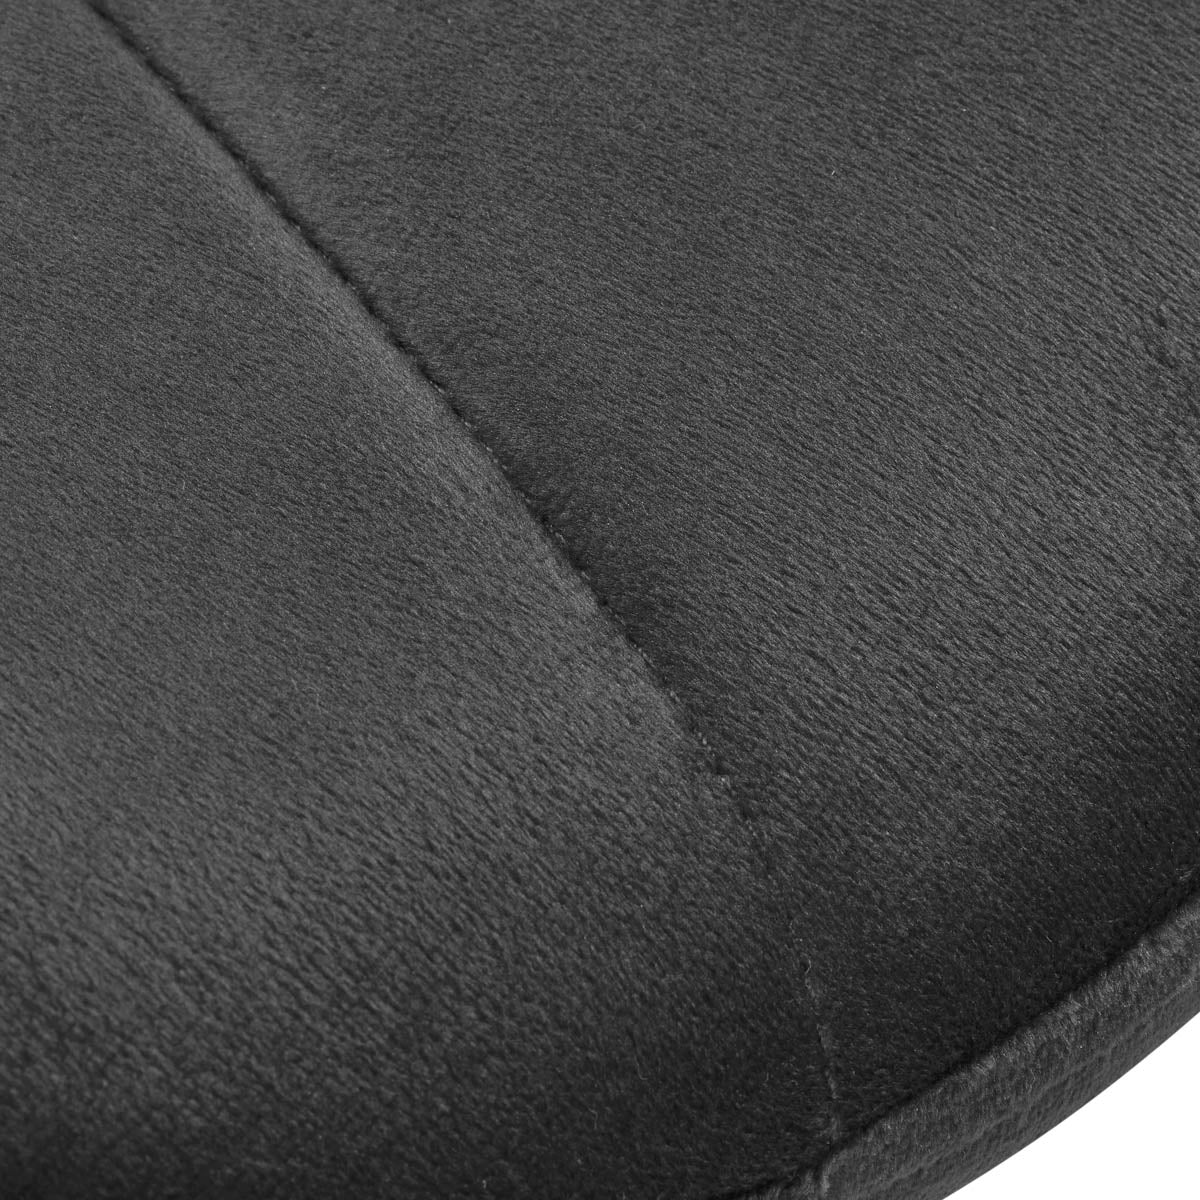 4Rico Cosmetic chair QS-186 gray velvet